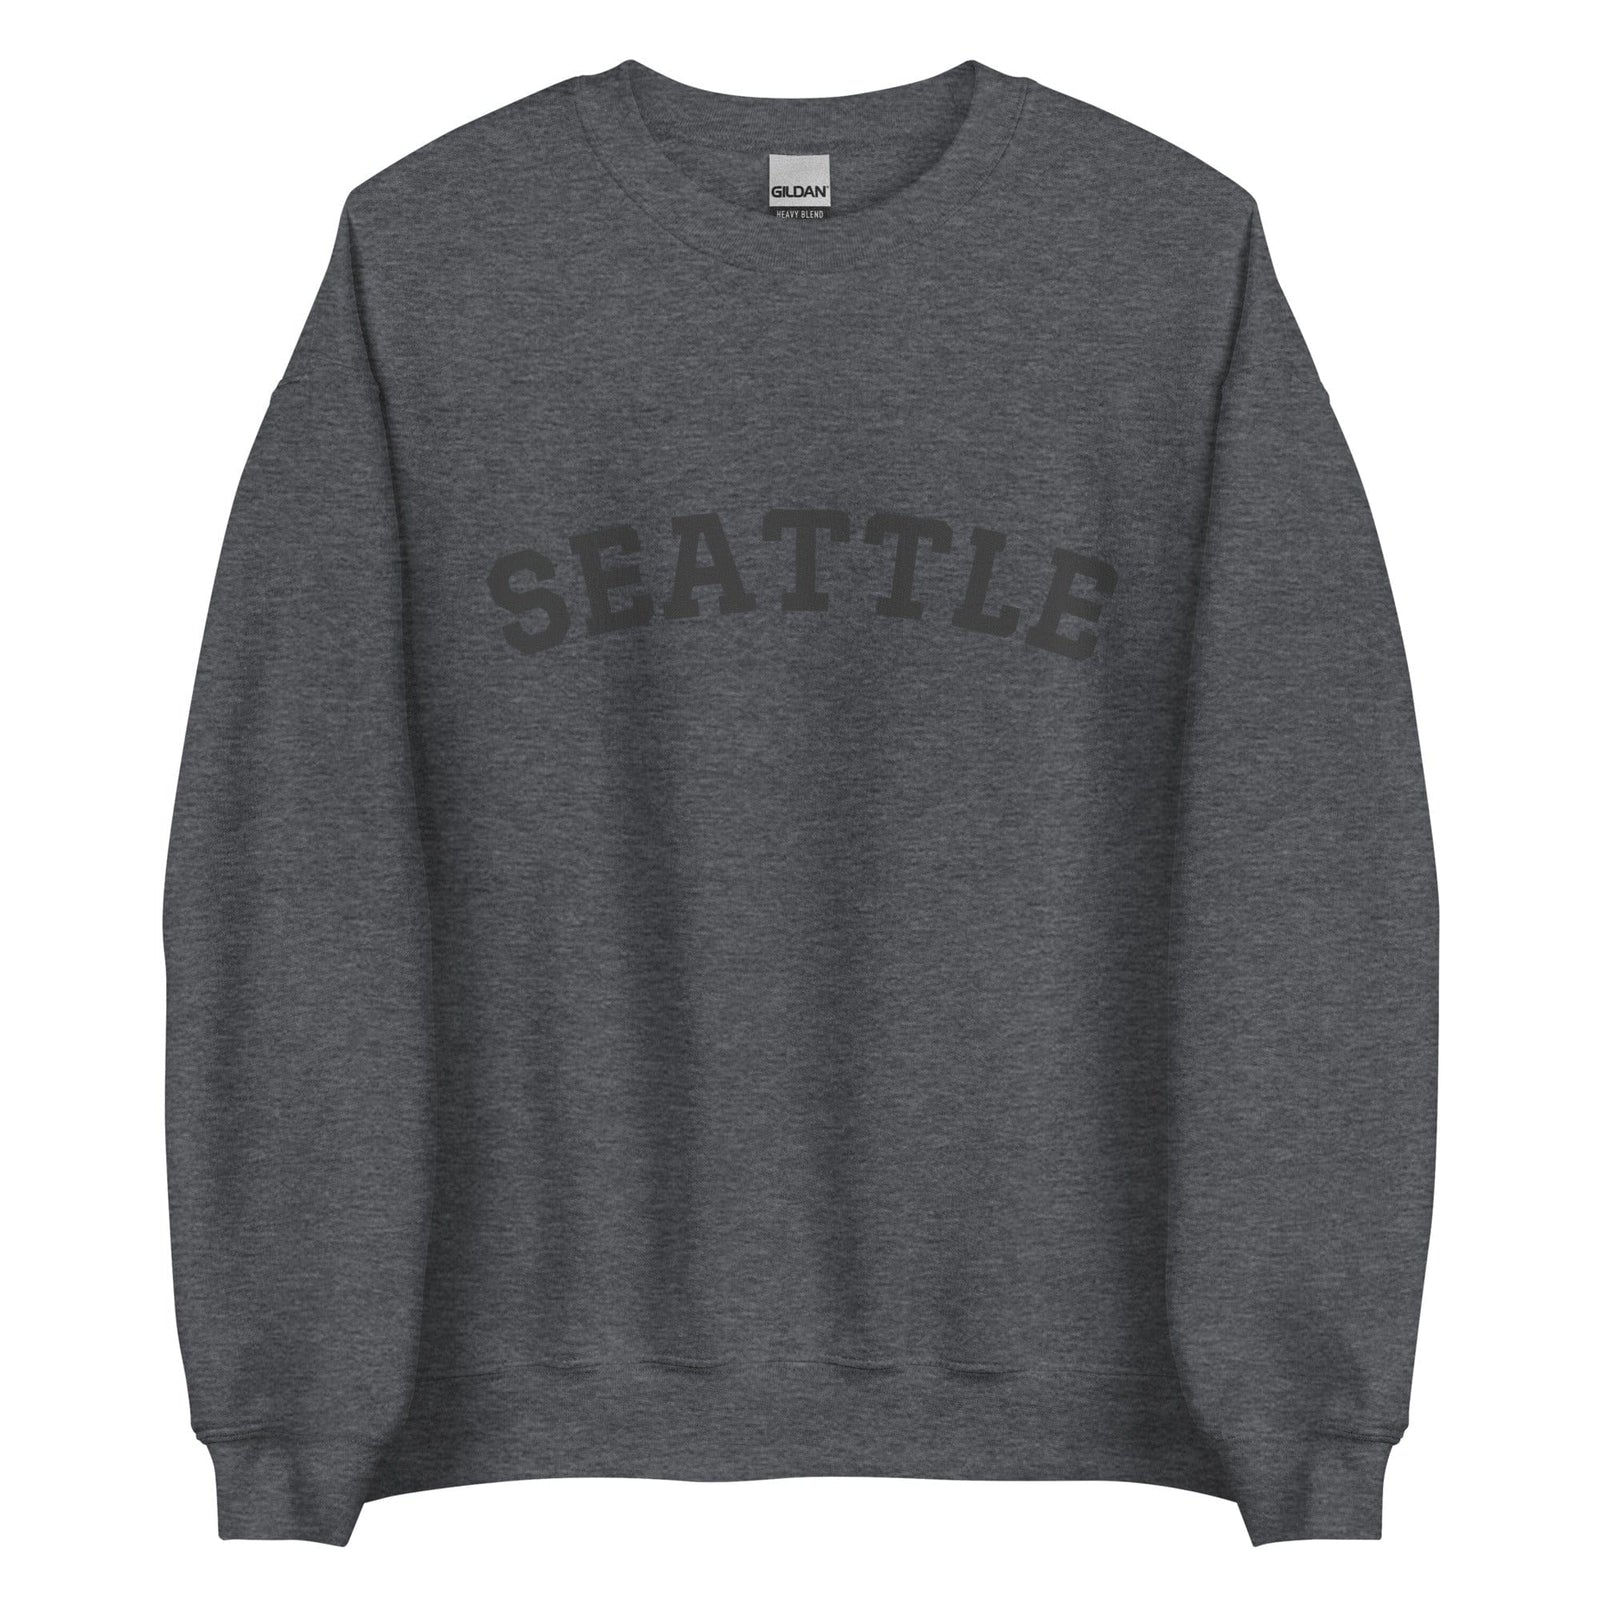 City Shirt Co Seattle TONAL Sweatshirt S